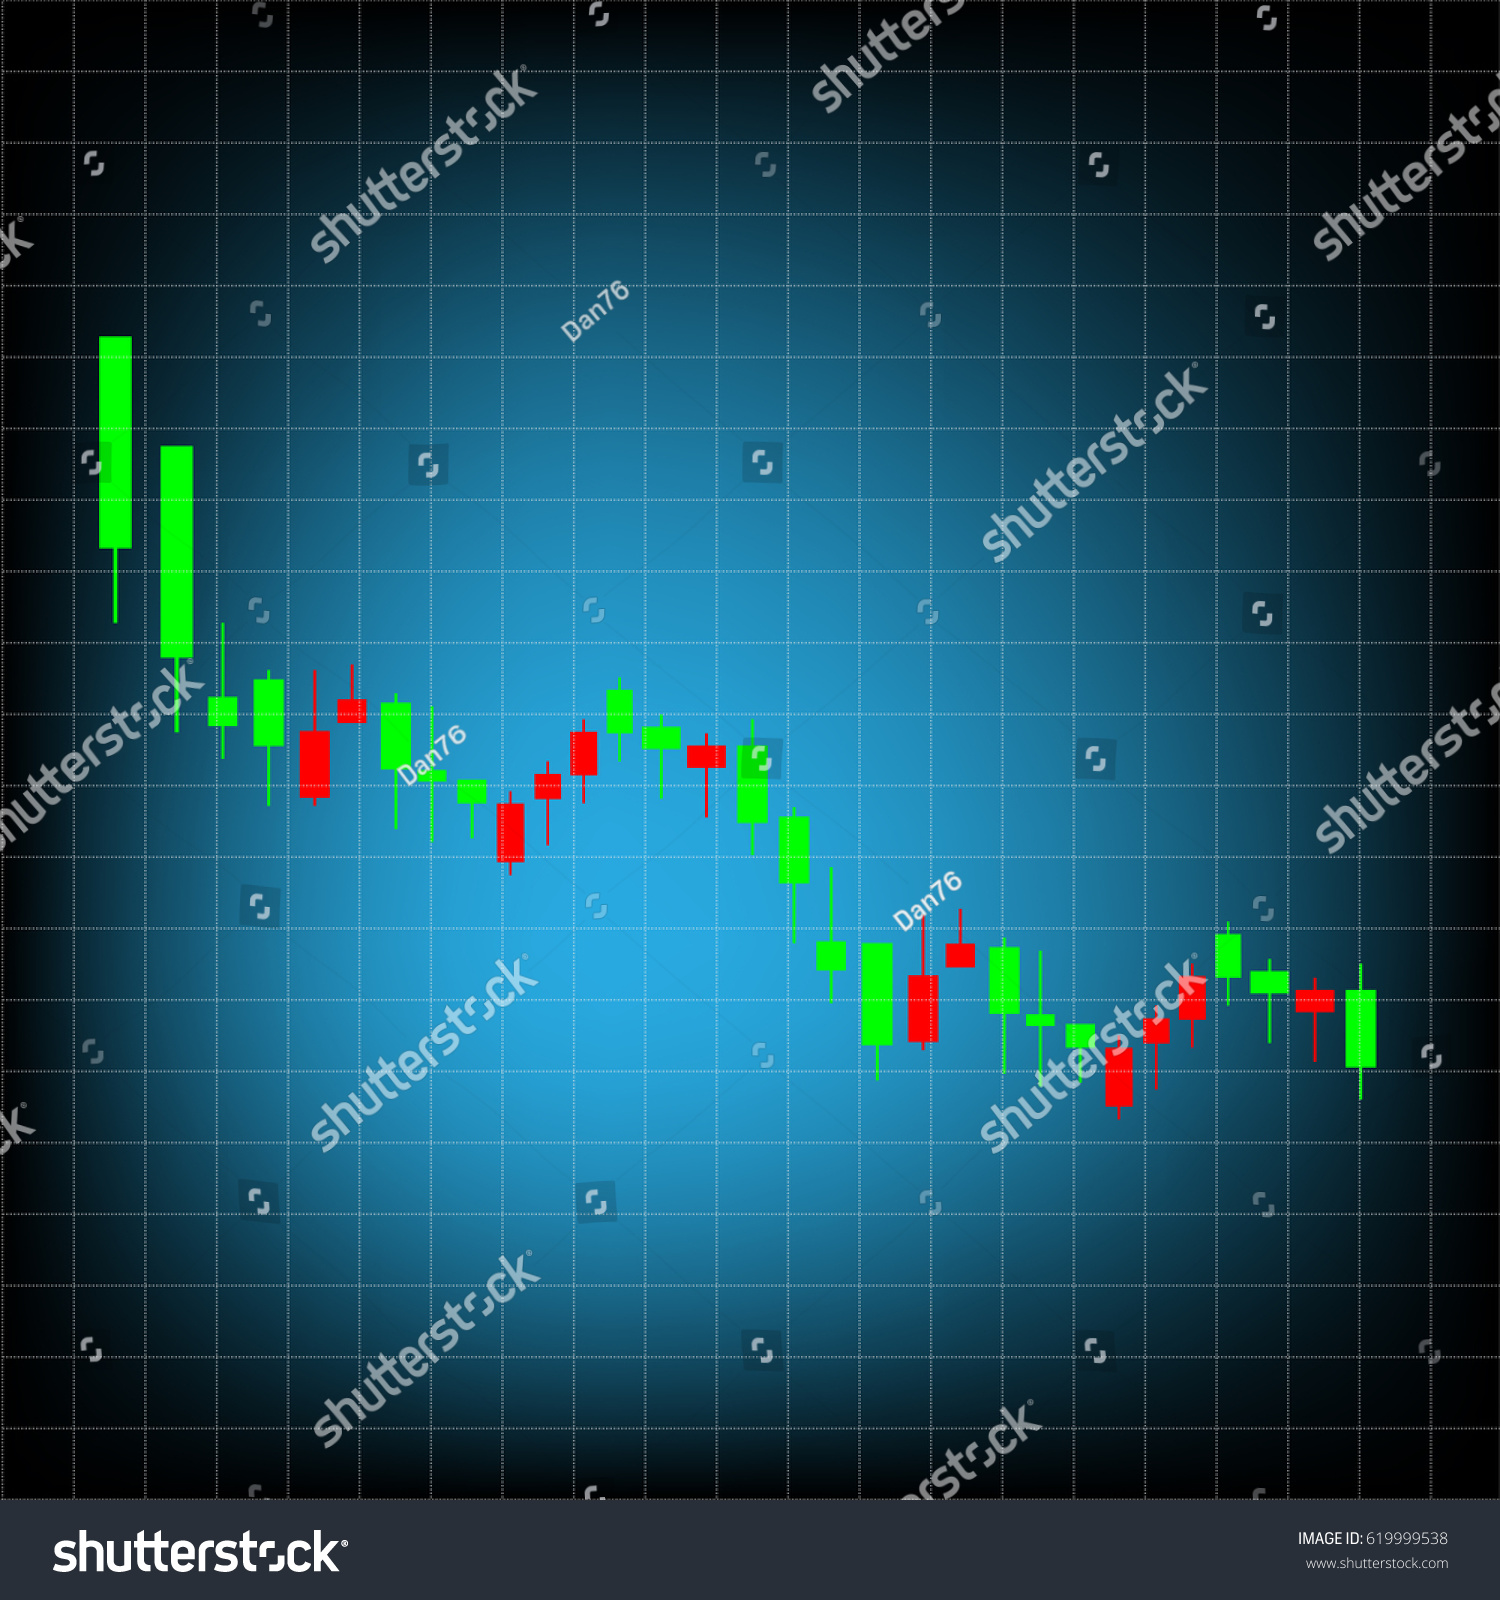 N Stock Price Chart